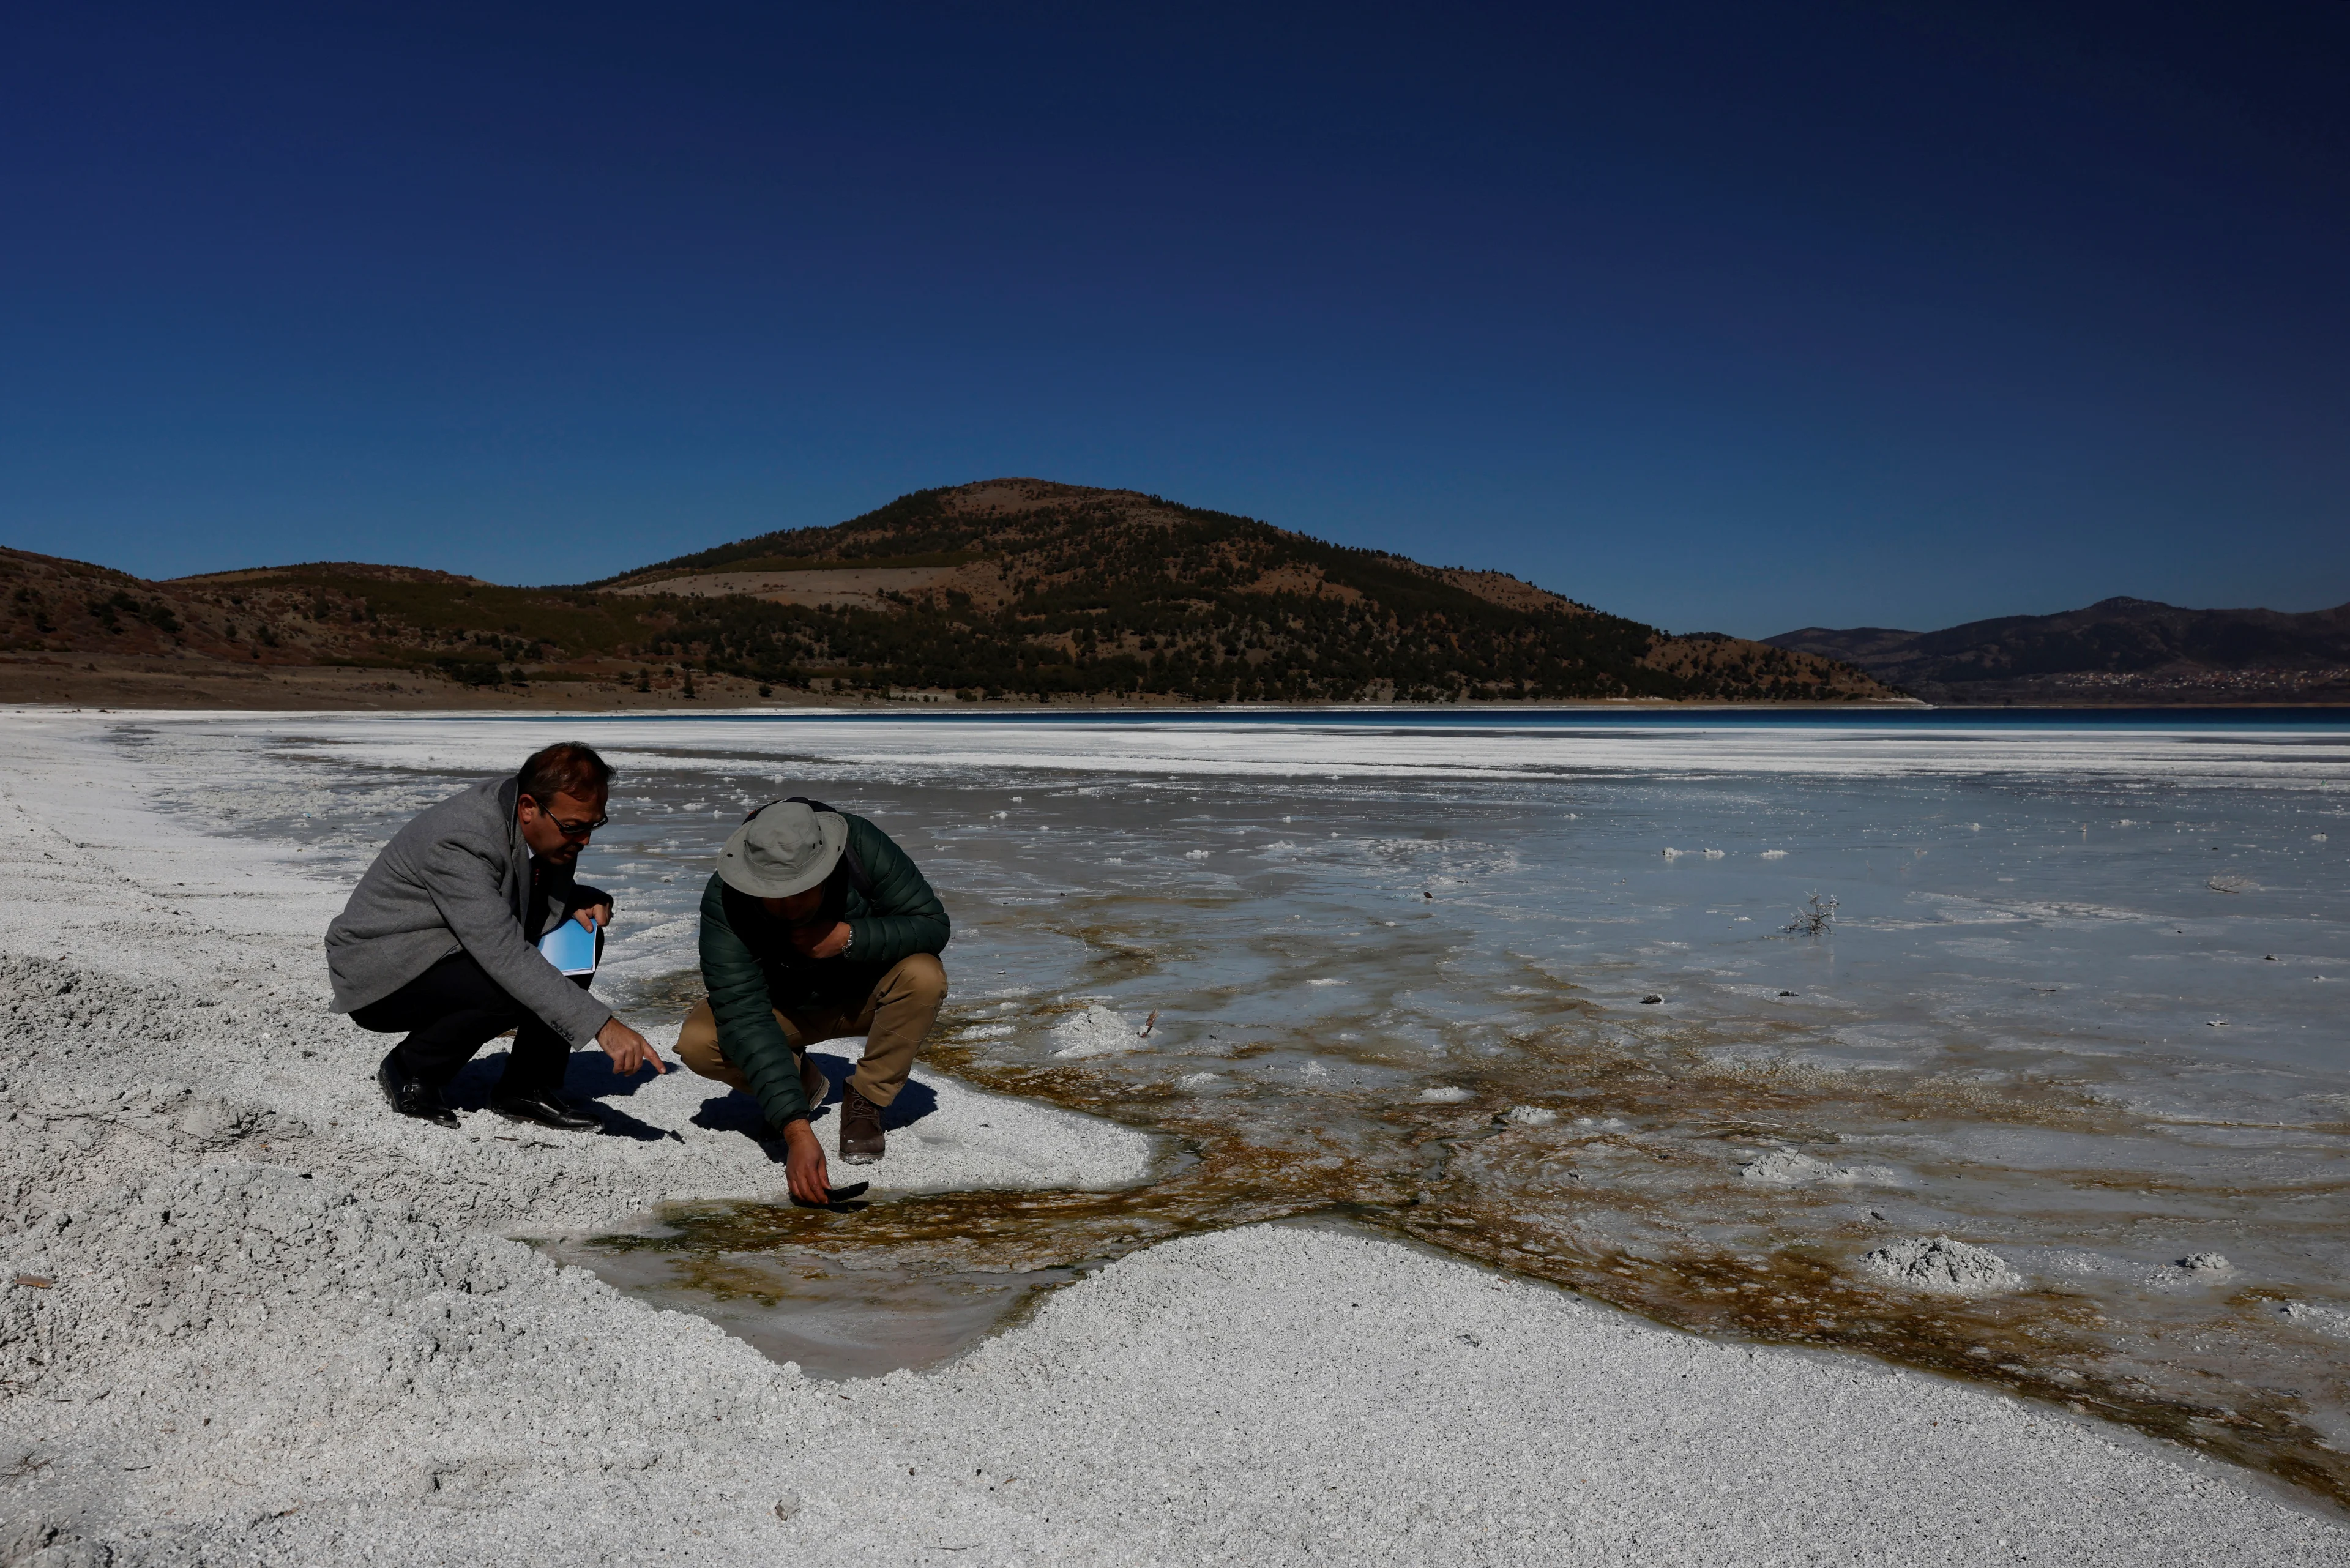 Reuters: Professor Latif Kurt of Ankara University and Umit Turan from Turkish Environment Ministry inspect the shoreline of Salda Lake in Burdur province, Turkey, March 1, 2021. REUTERS/Umit Bektas